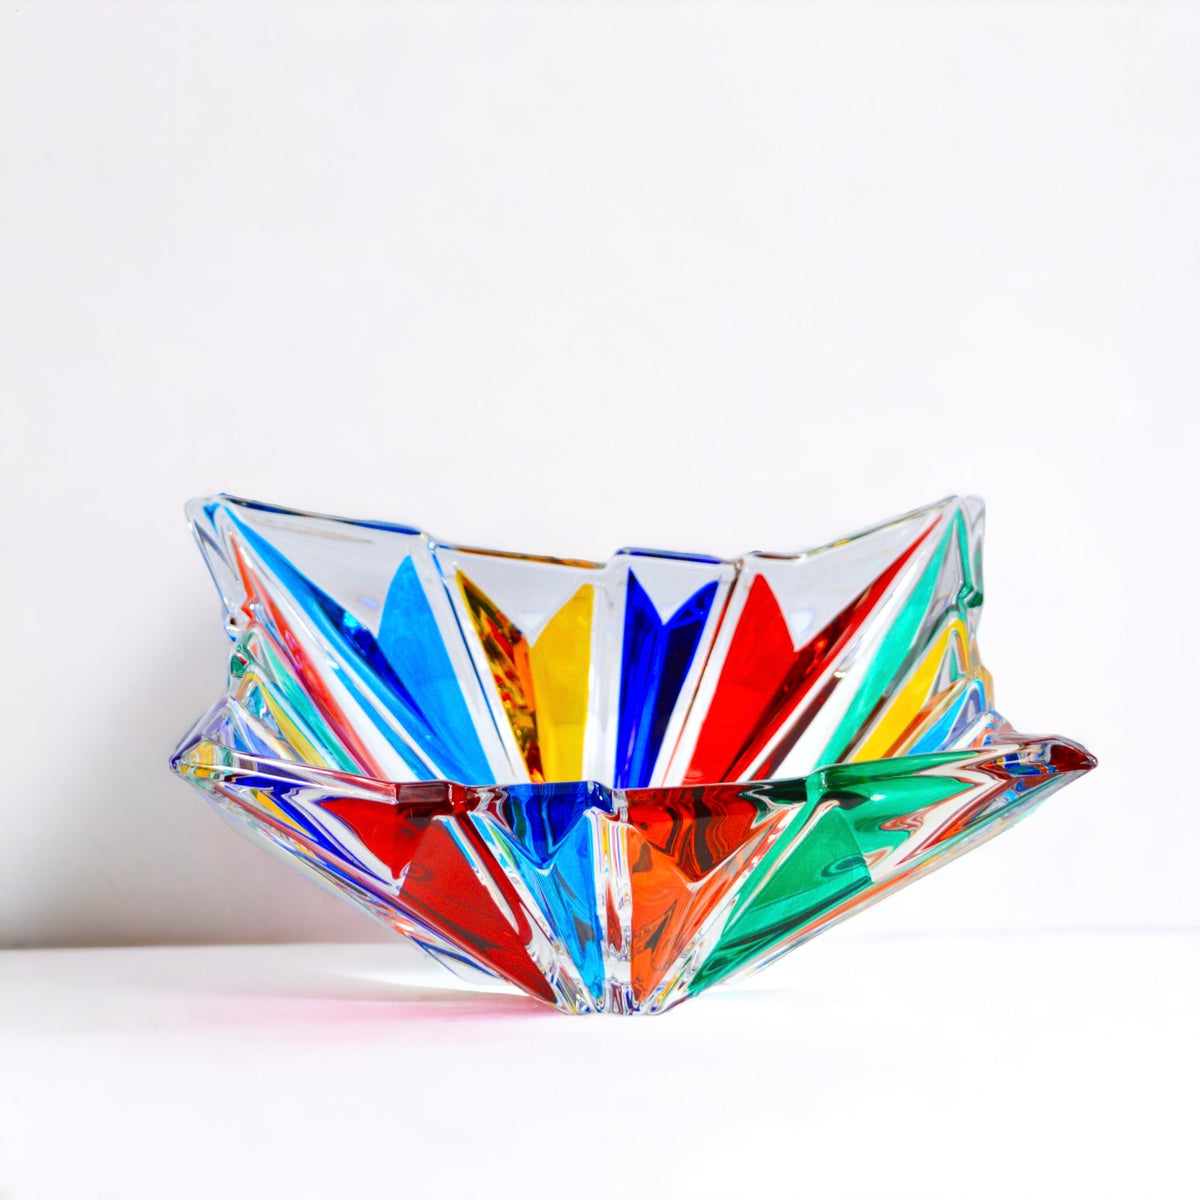 Empress Italian Crystal Square Centerpiece Bowl, Made in Italy - My Italian Decor